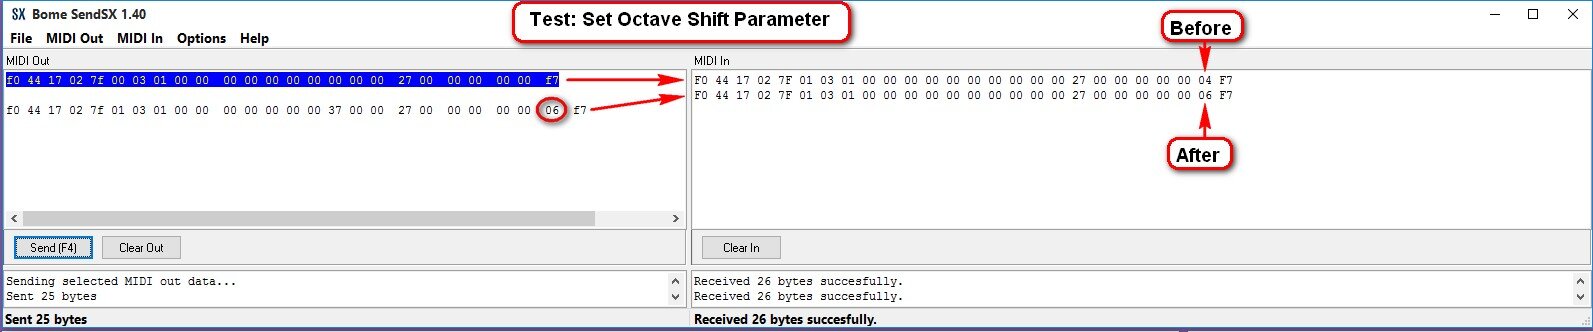 Example Set Octave Shift Parameter.jpg